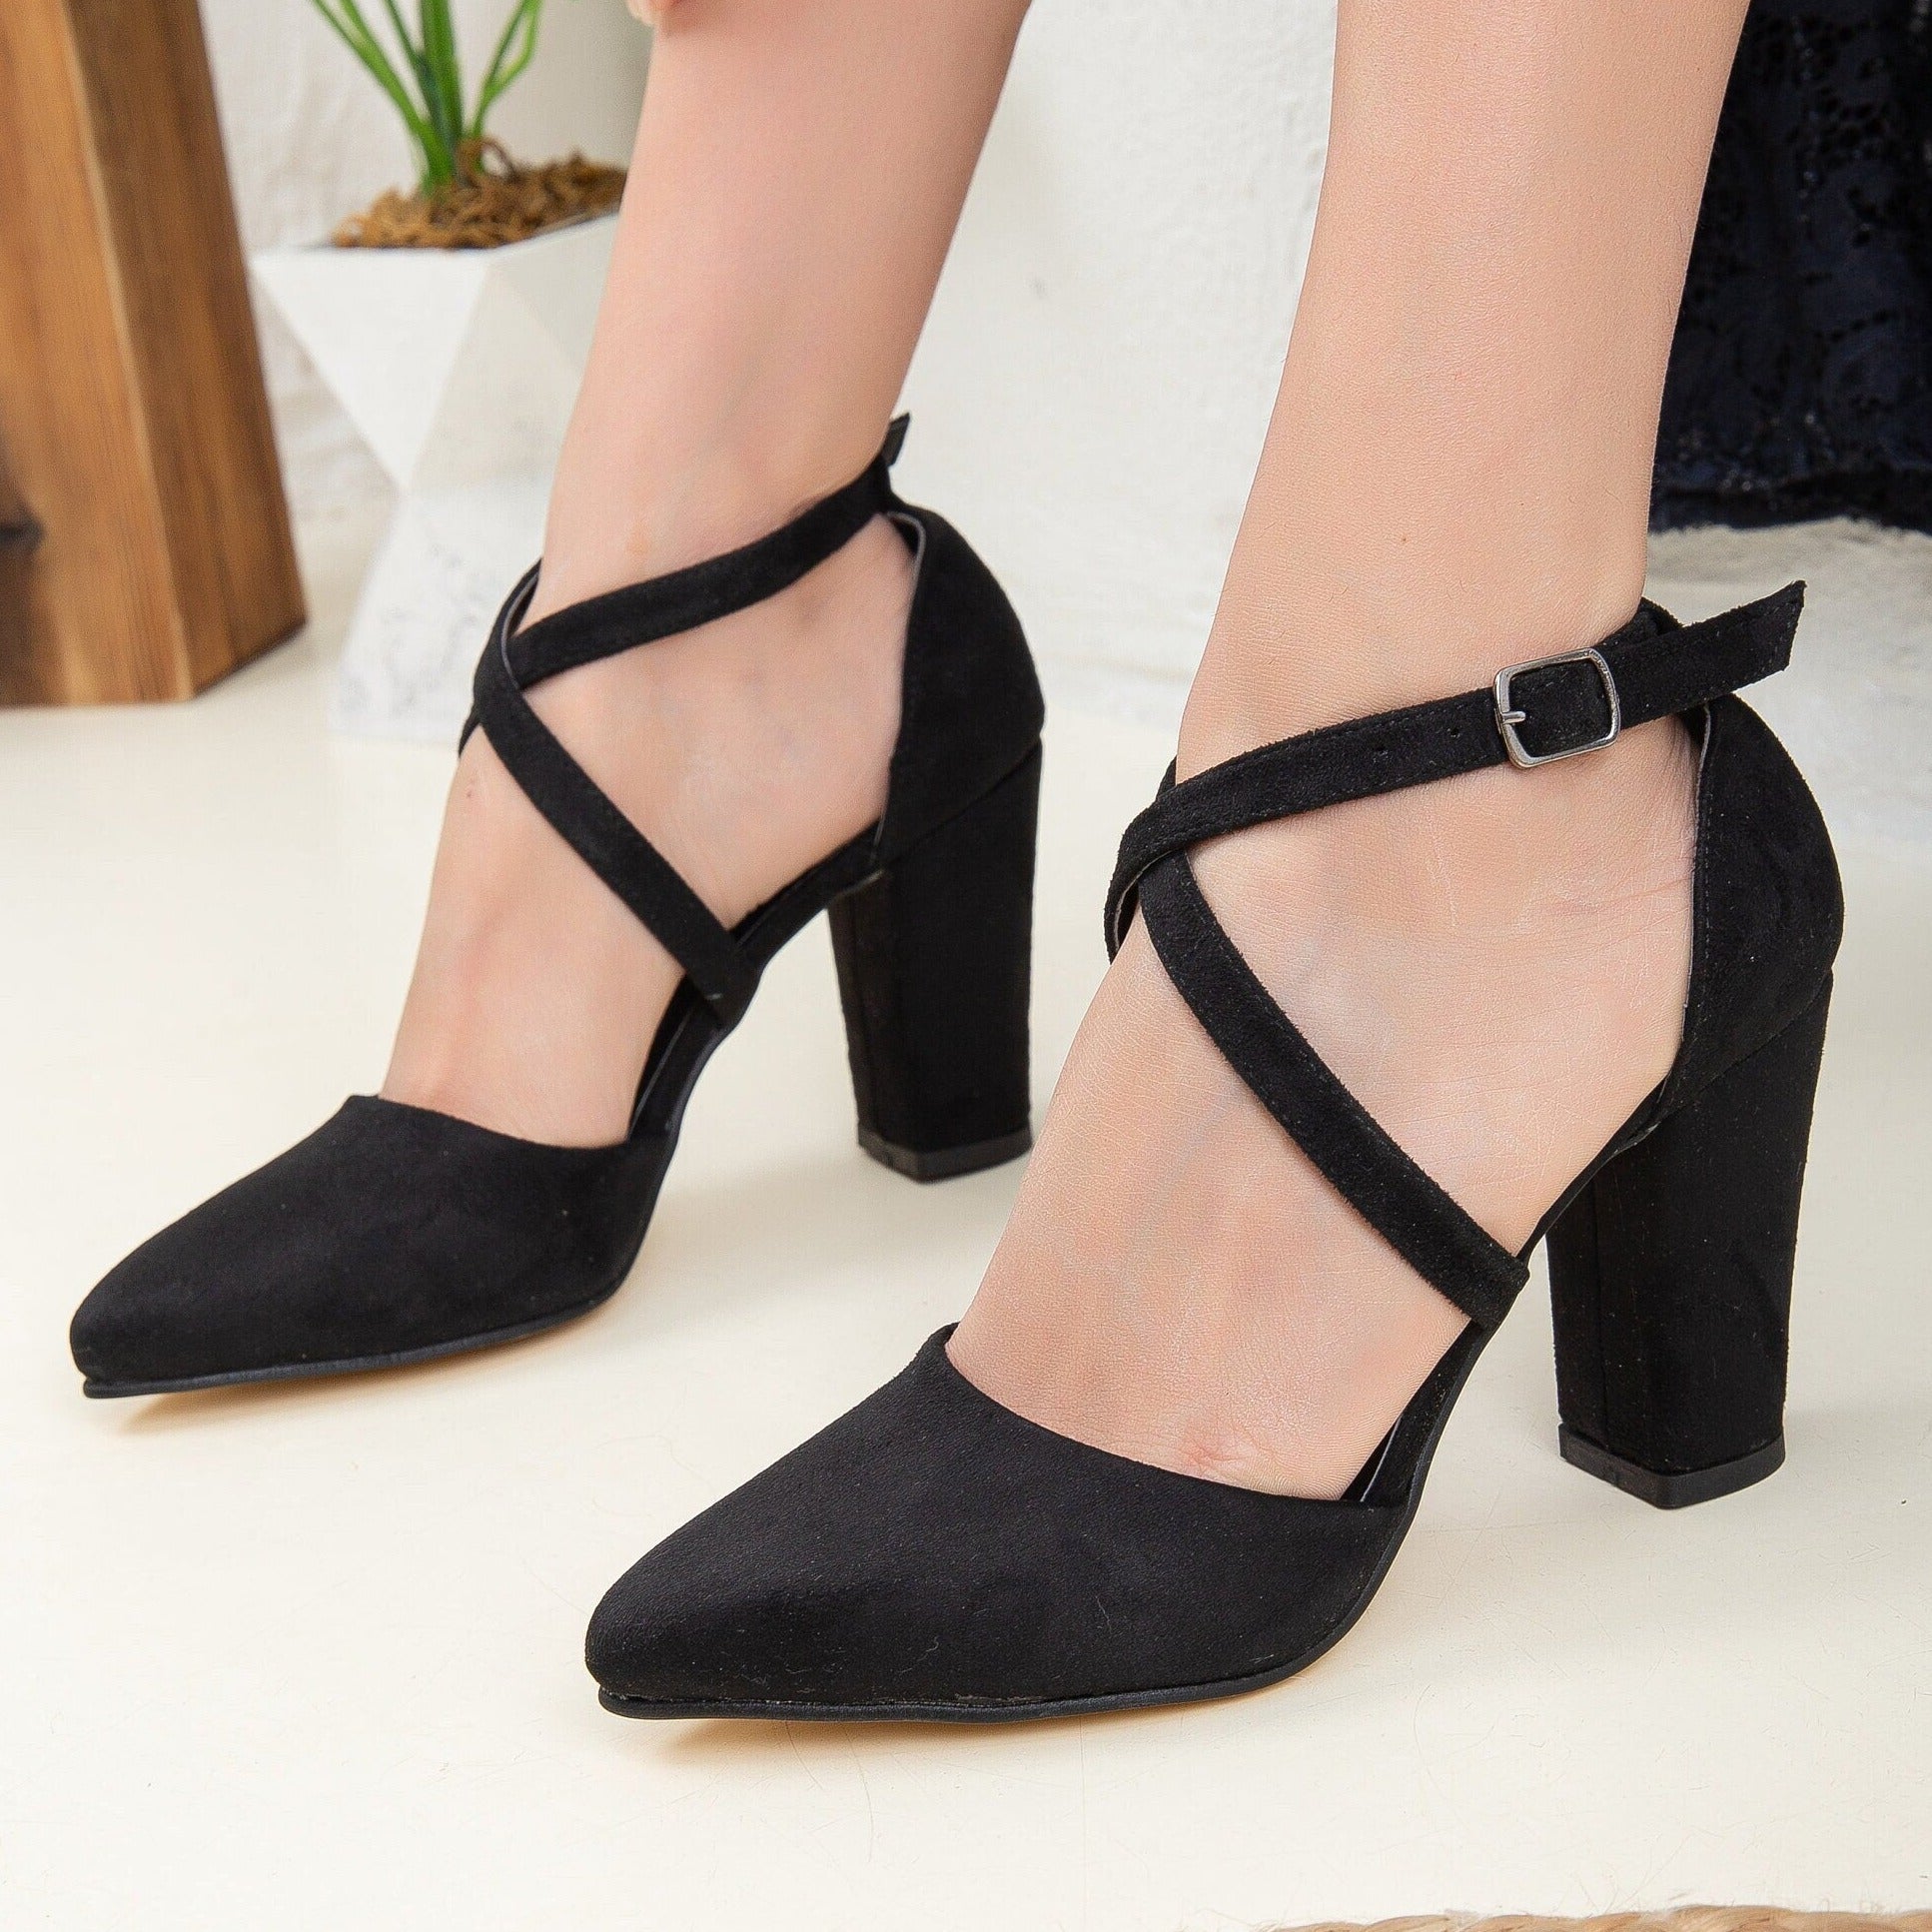 Black Suede Stiletto High Heels Pointed Toe Pumps For Women - Milanoo.com